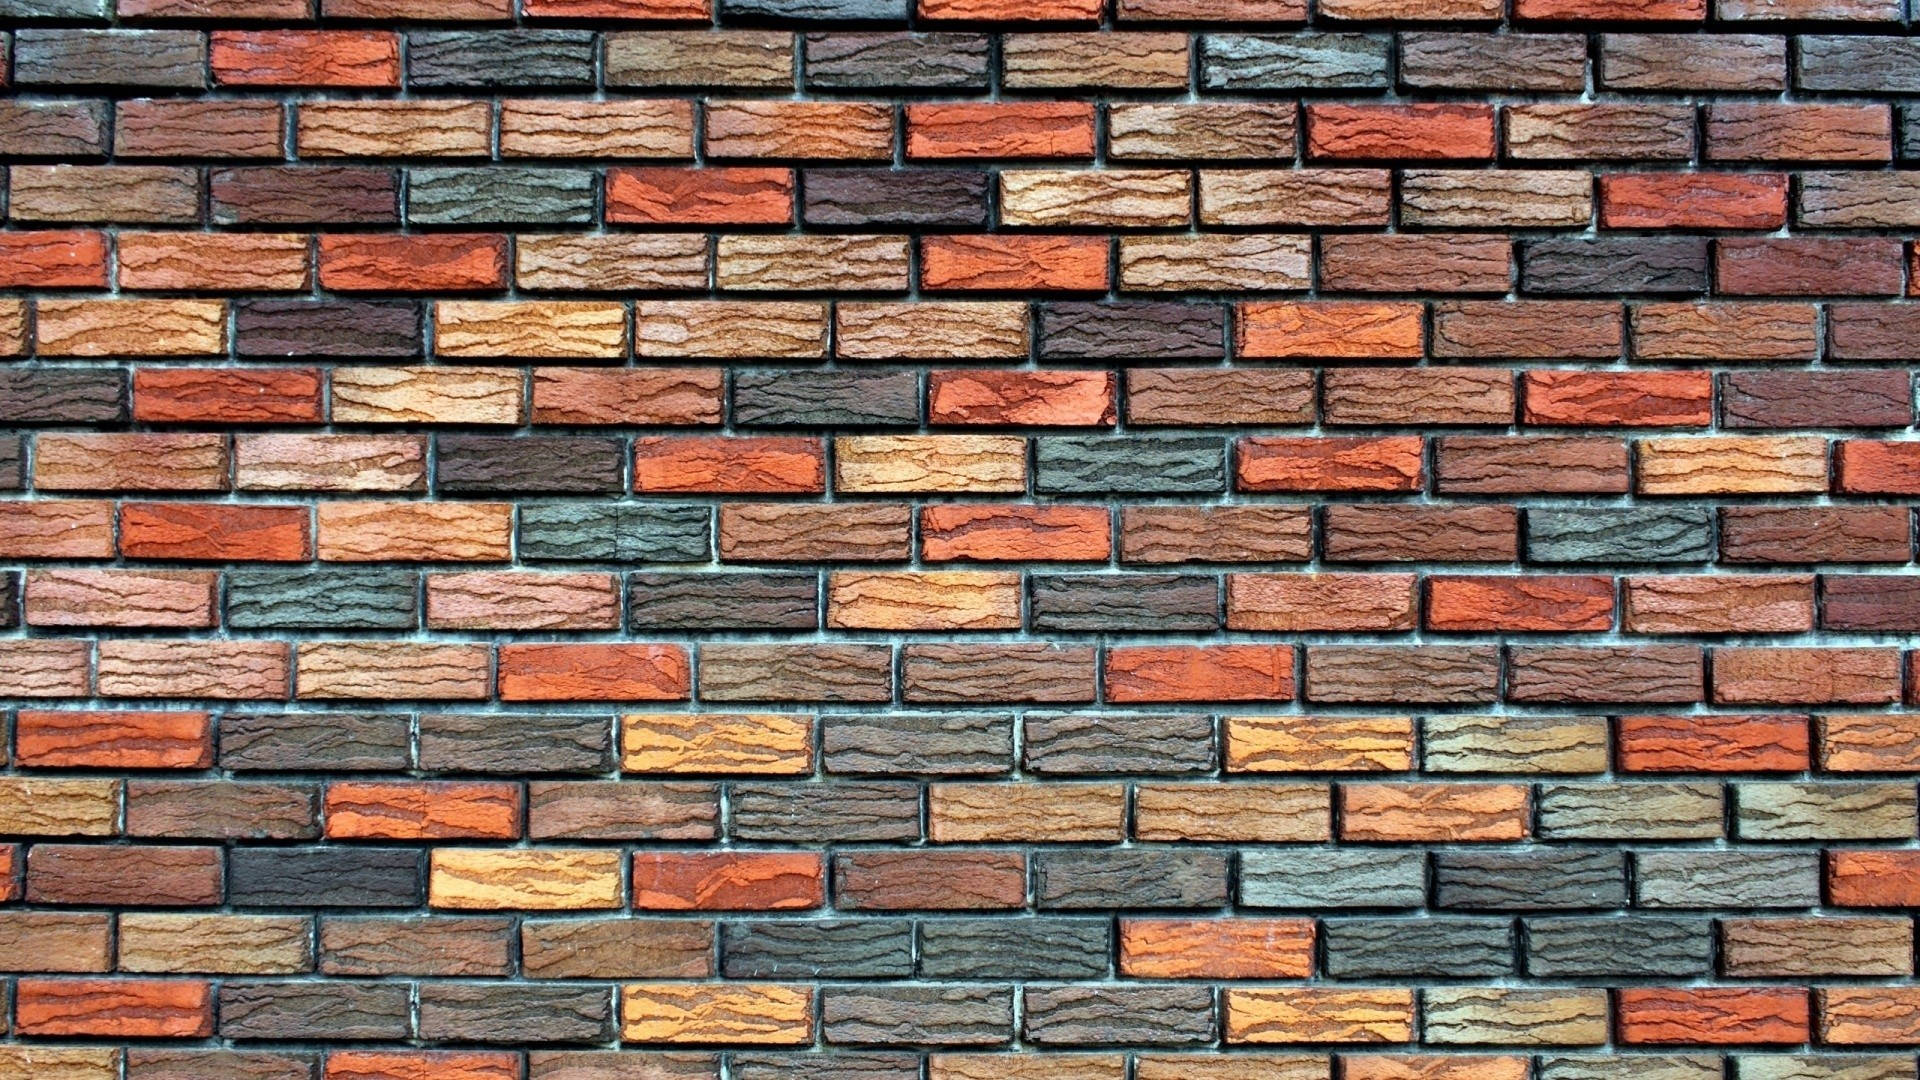 Multicolored Brick Texture Wall Wallpaper